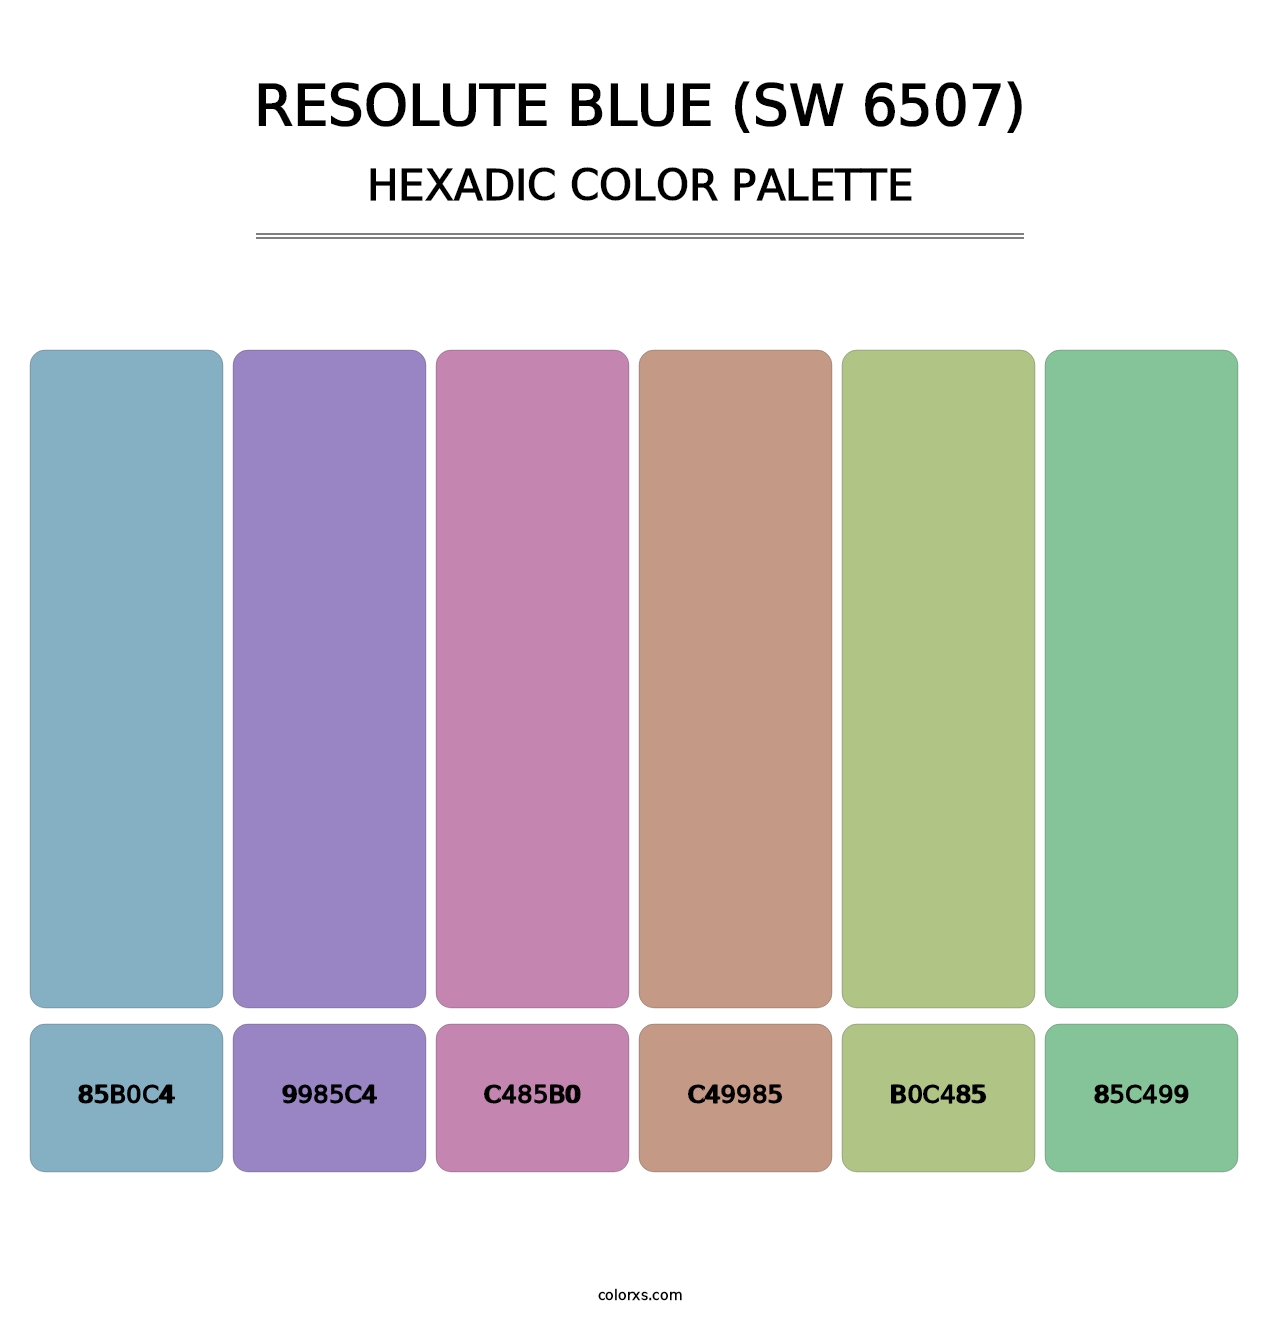 Resolute Blue (SW 6507) - Hexadic Color Palette